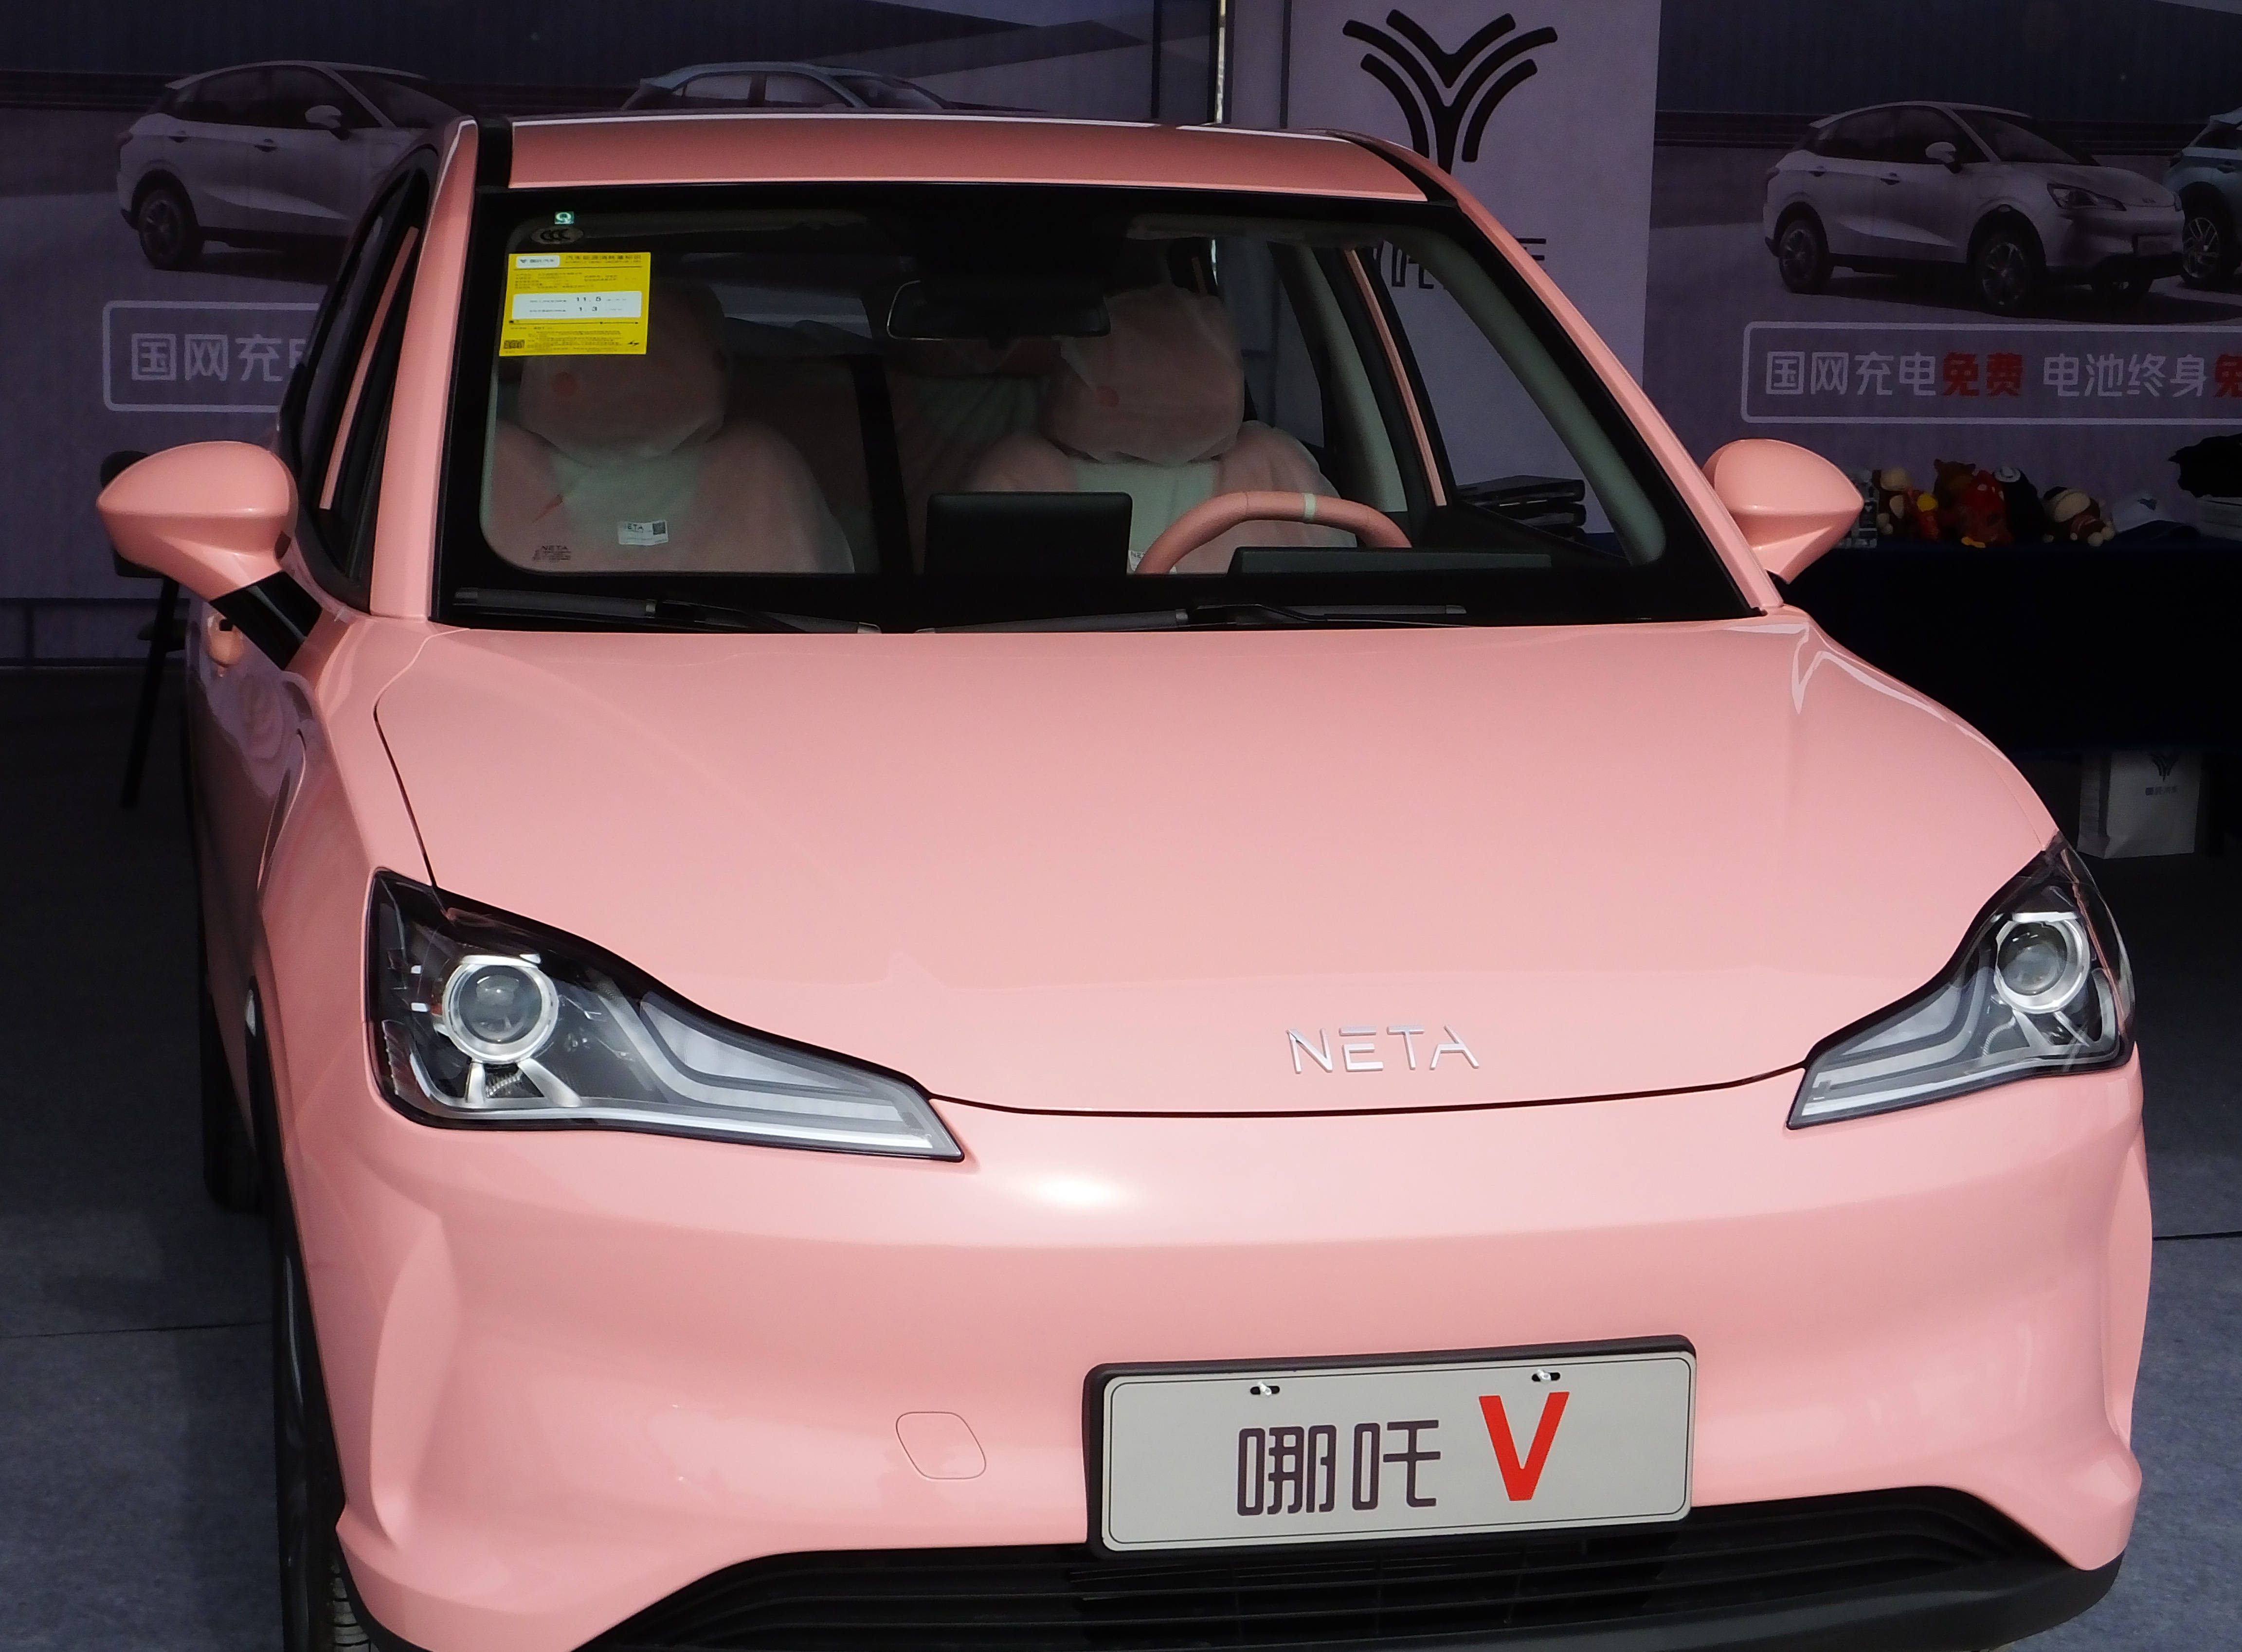 neta汽车粉色图片